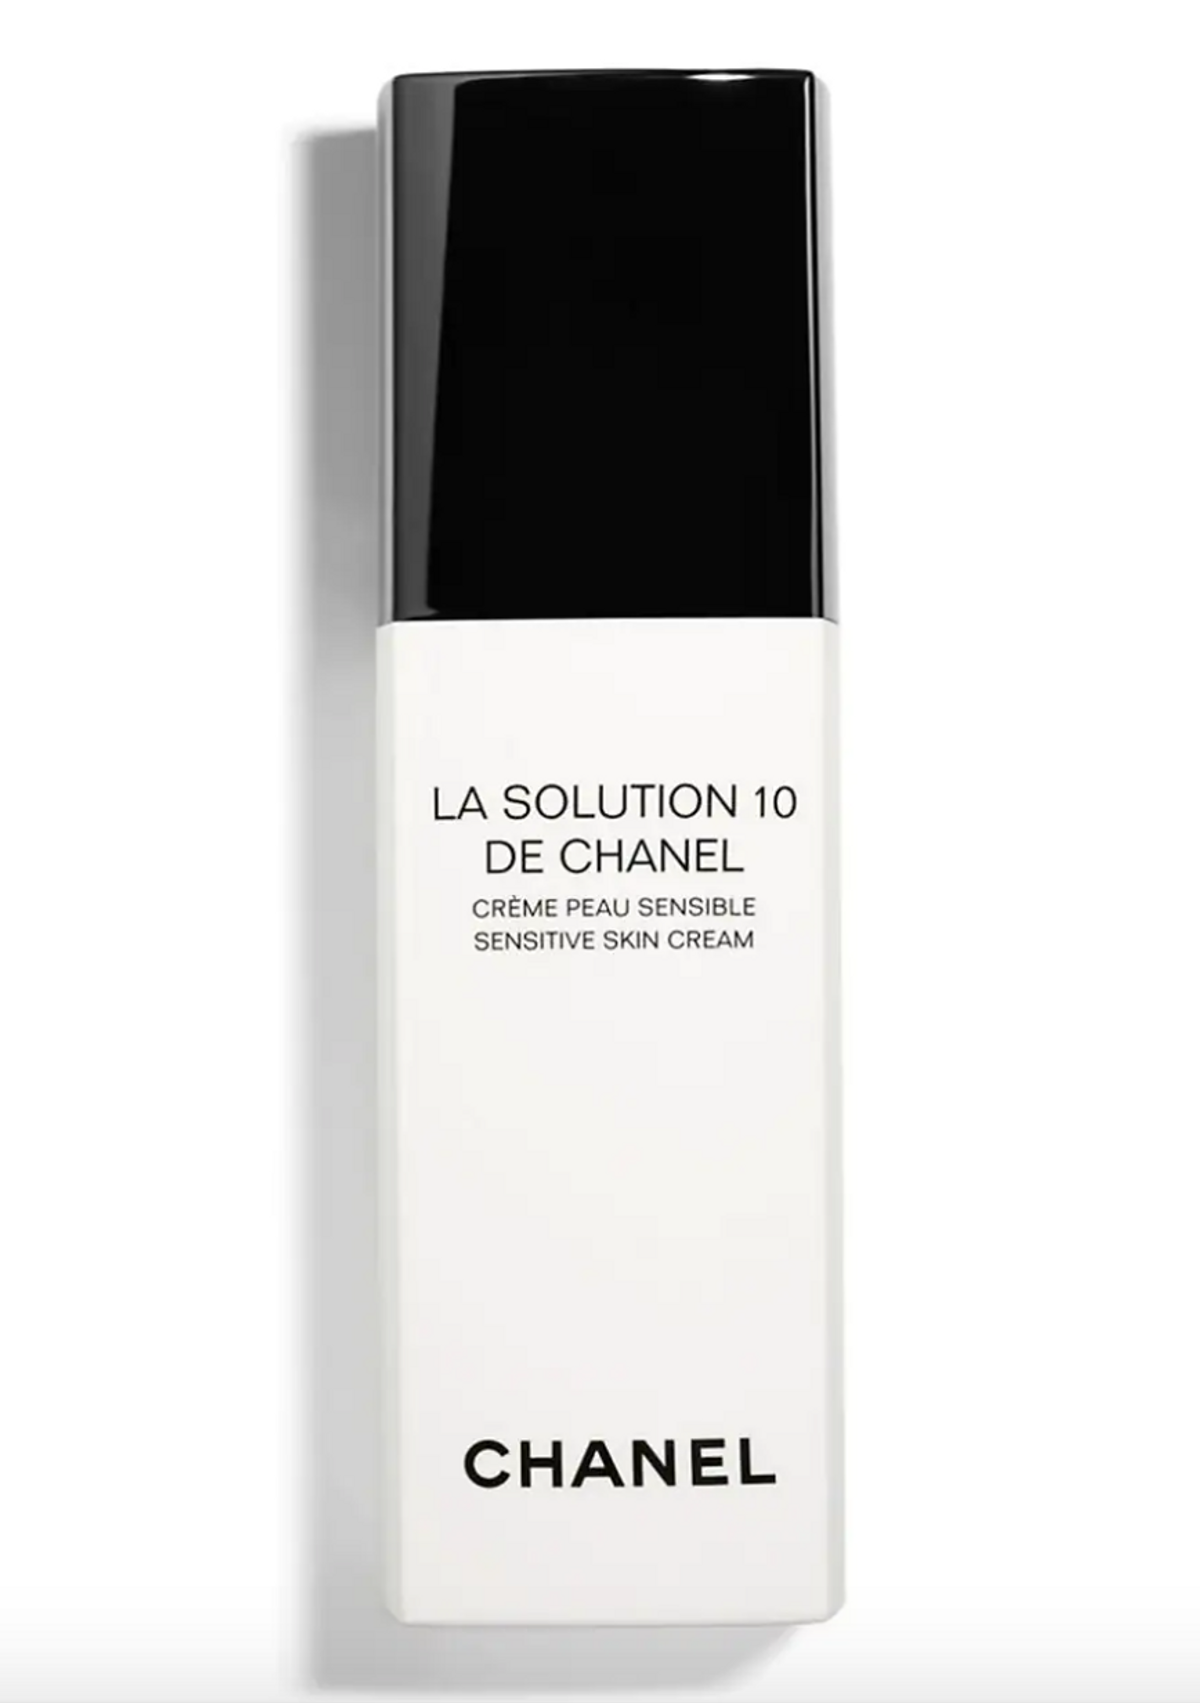 La Solution 10 de Chanel Sensitive Skin Cream